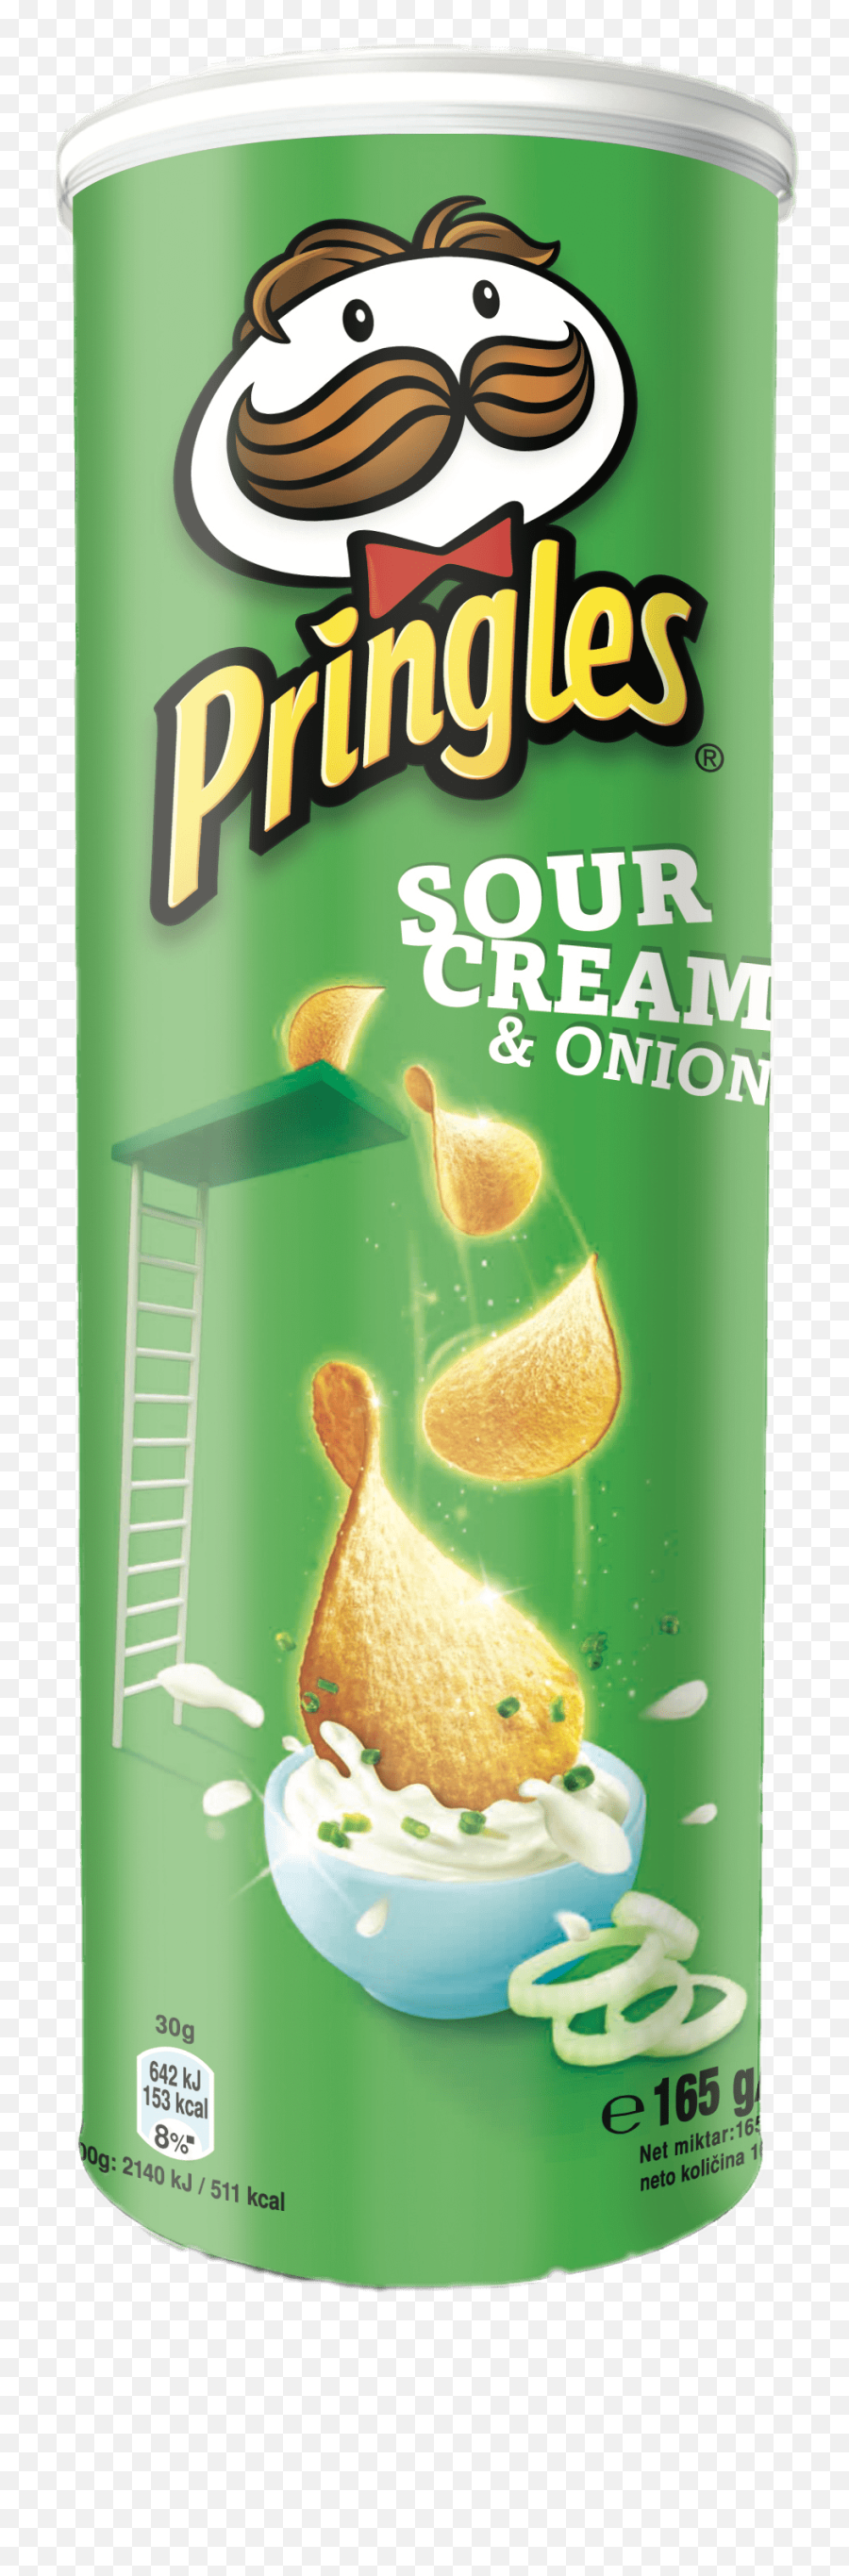 Pringles Png 4 Image - Pringles Sour Cream And Onion,Pringles Png